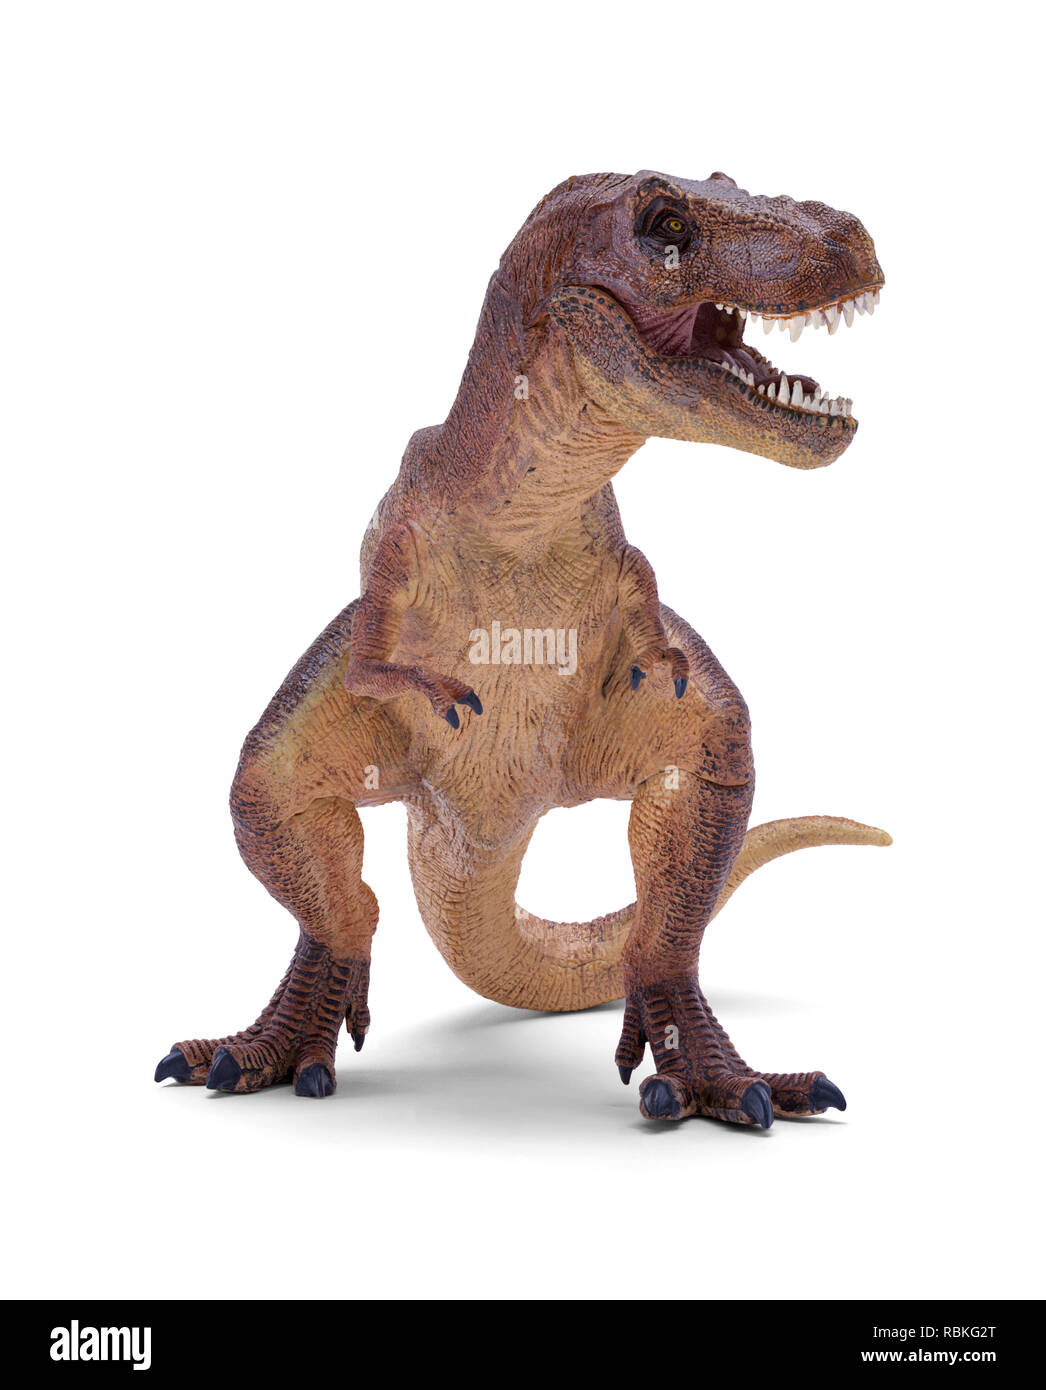 Tyrannosaurus Rex Dinosaur With Sharp Teeth Isolated on White Background. Stock Photo